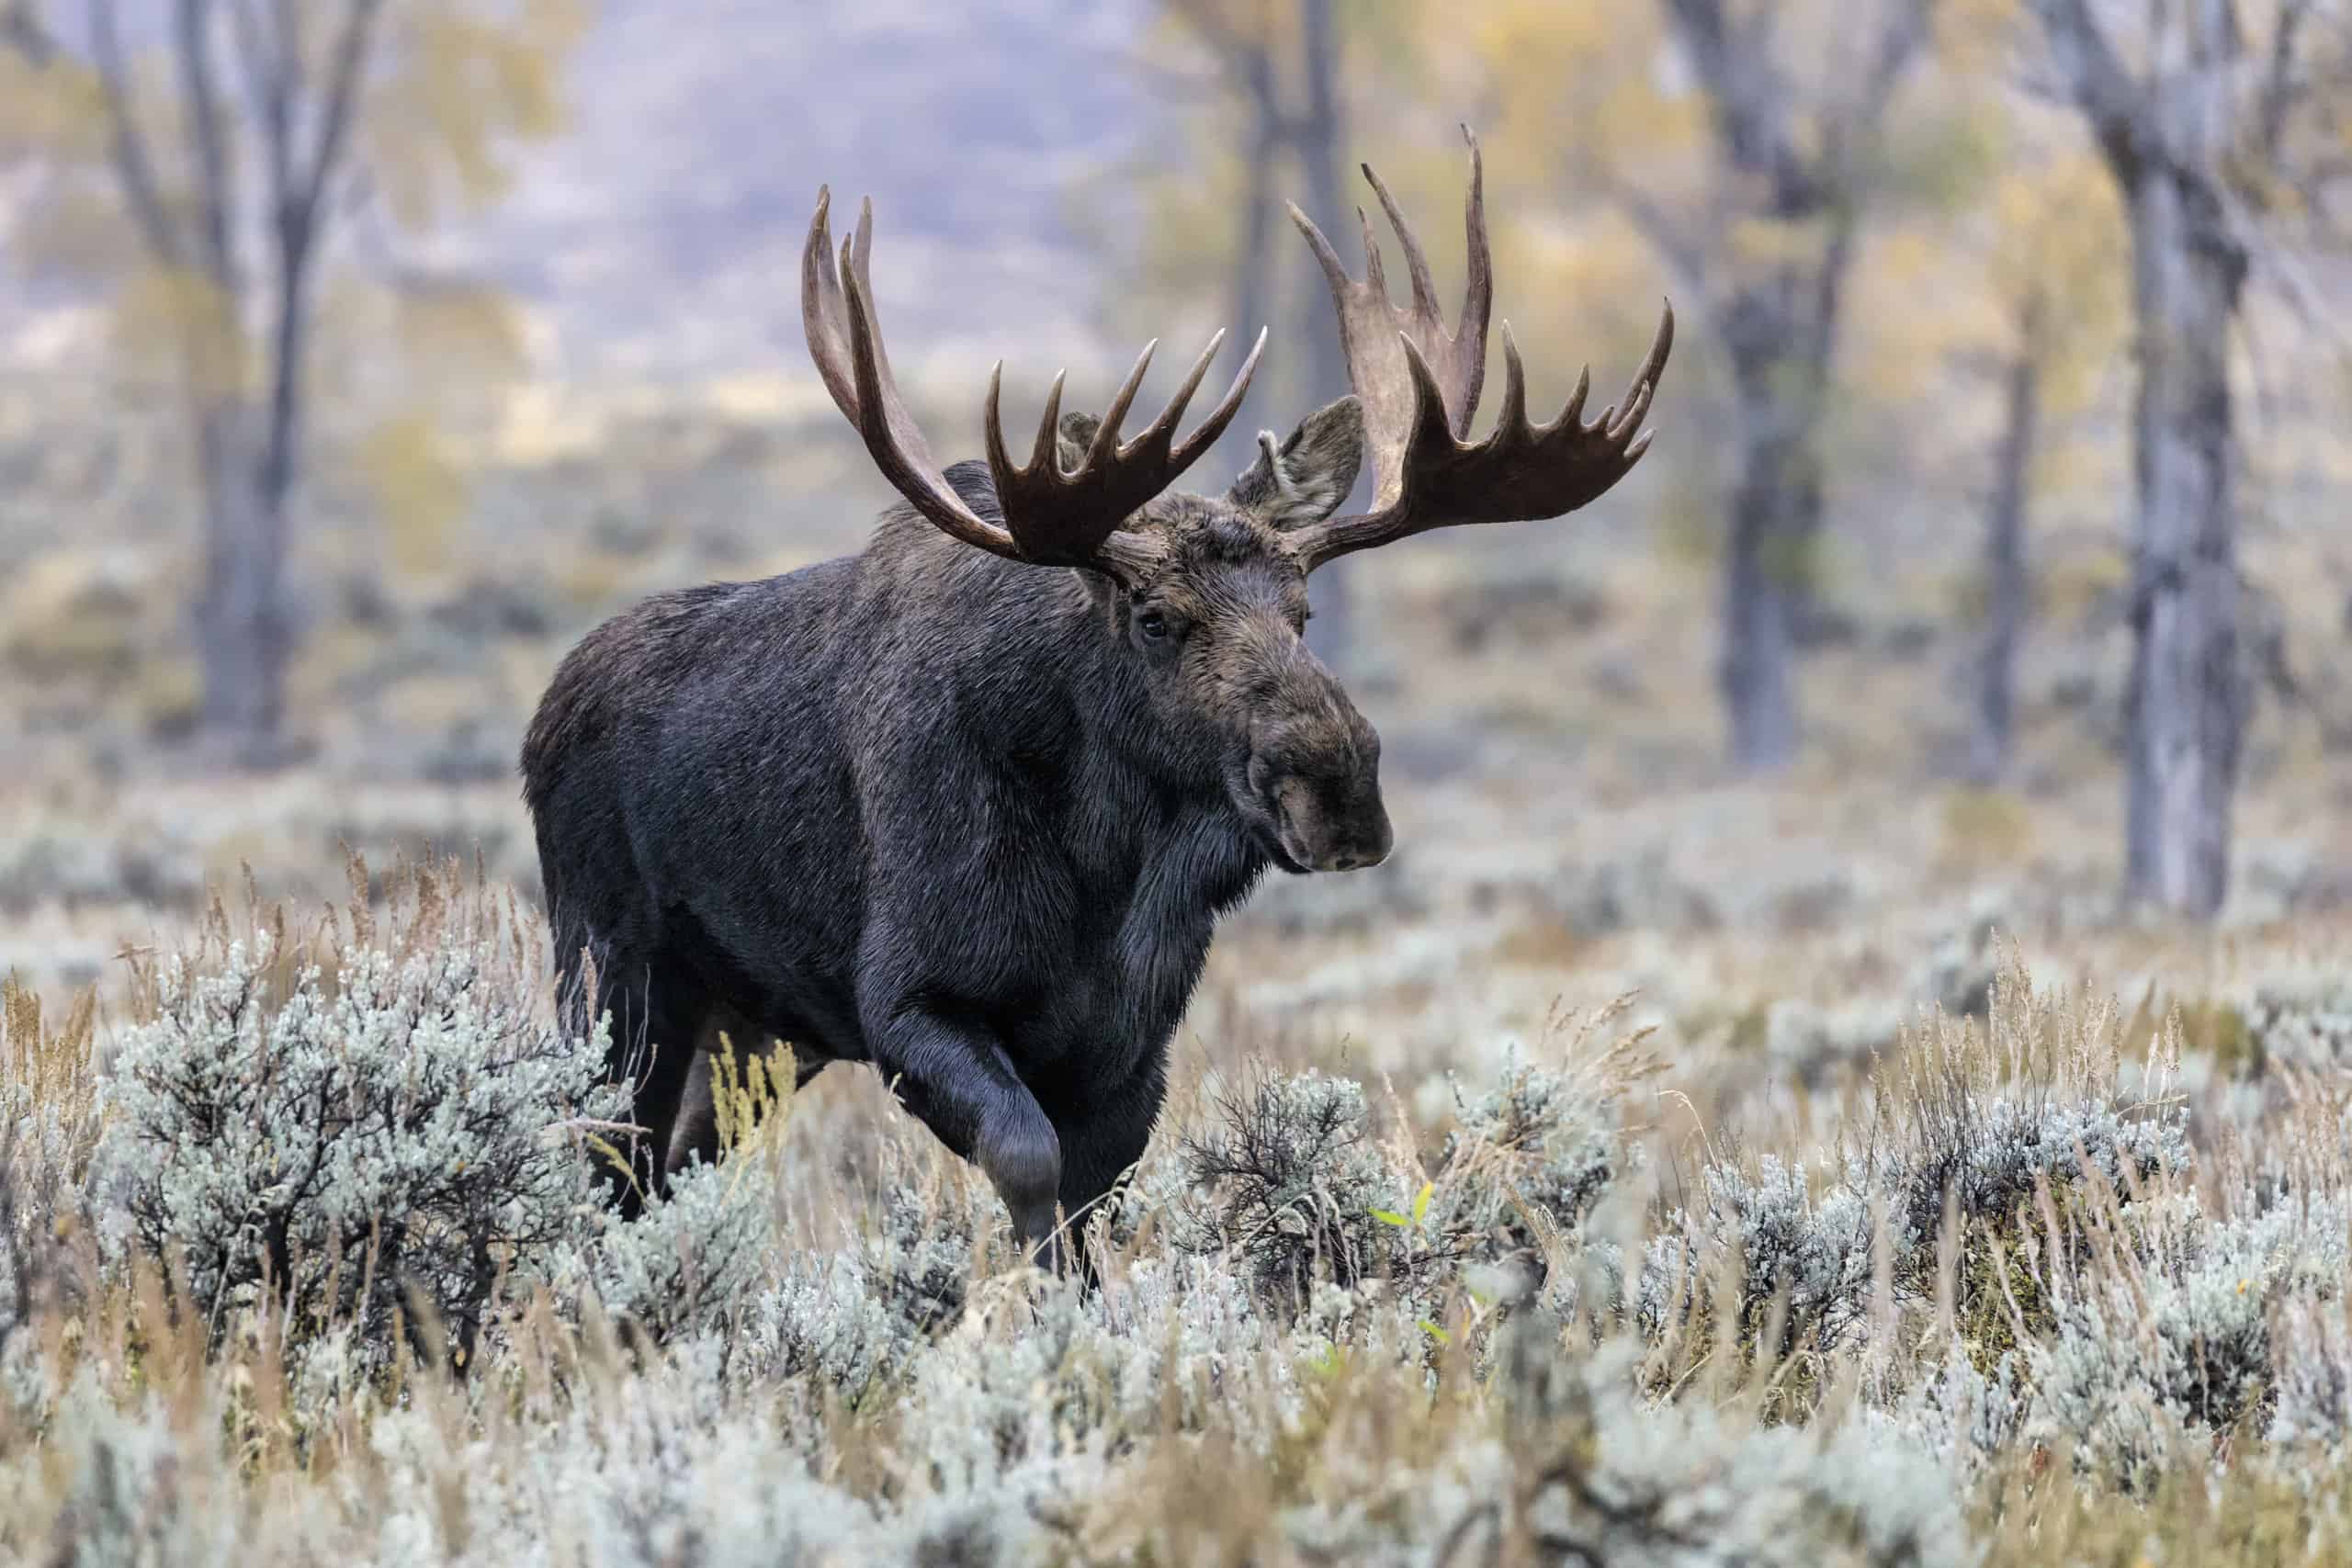 Large bull moose